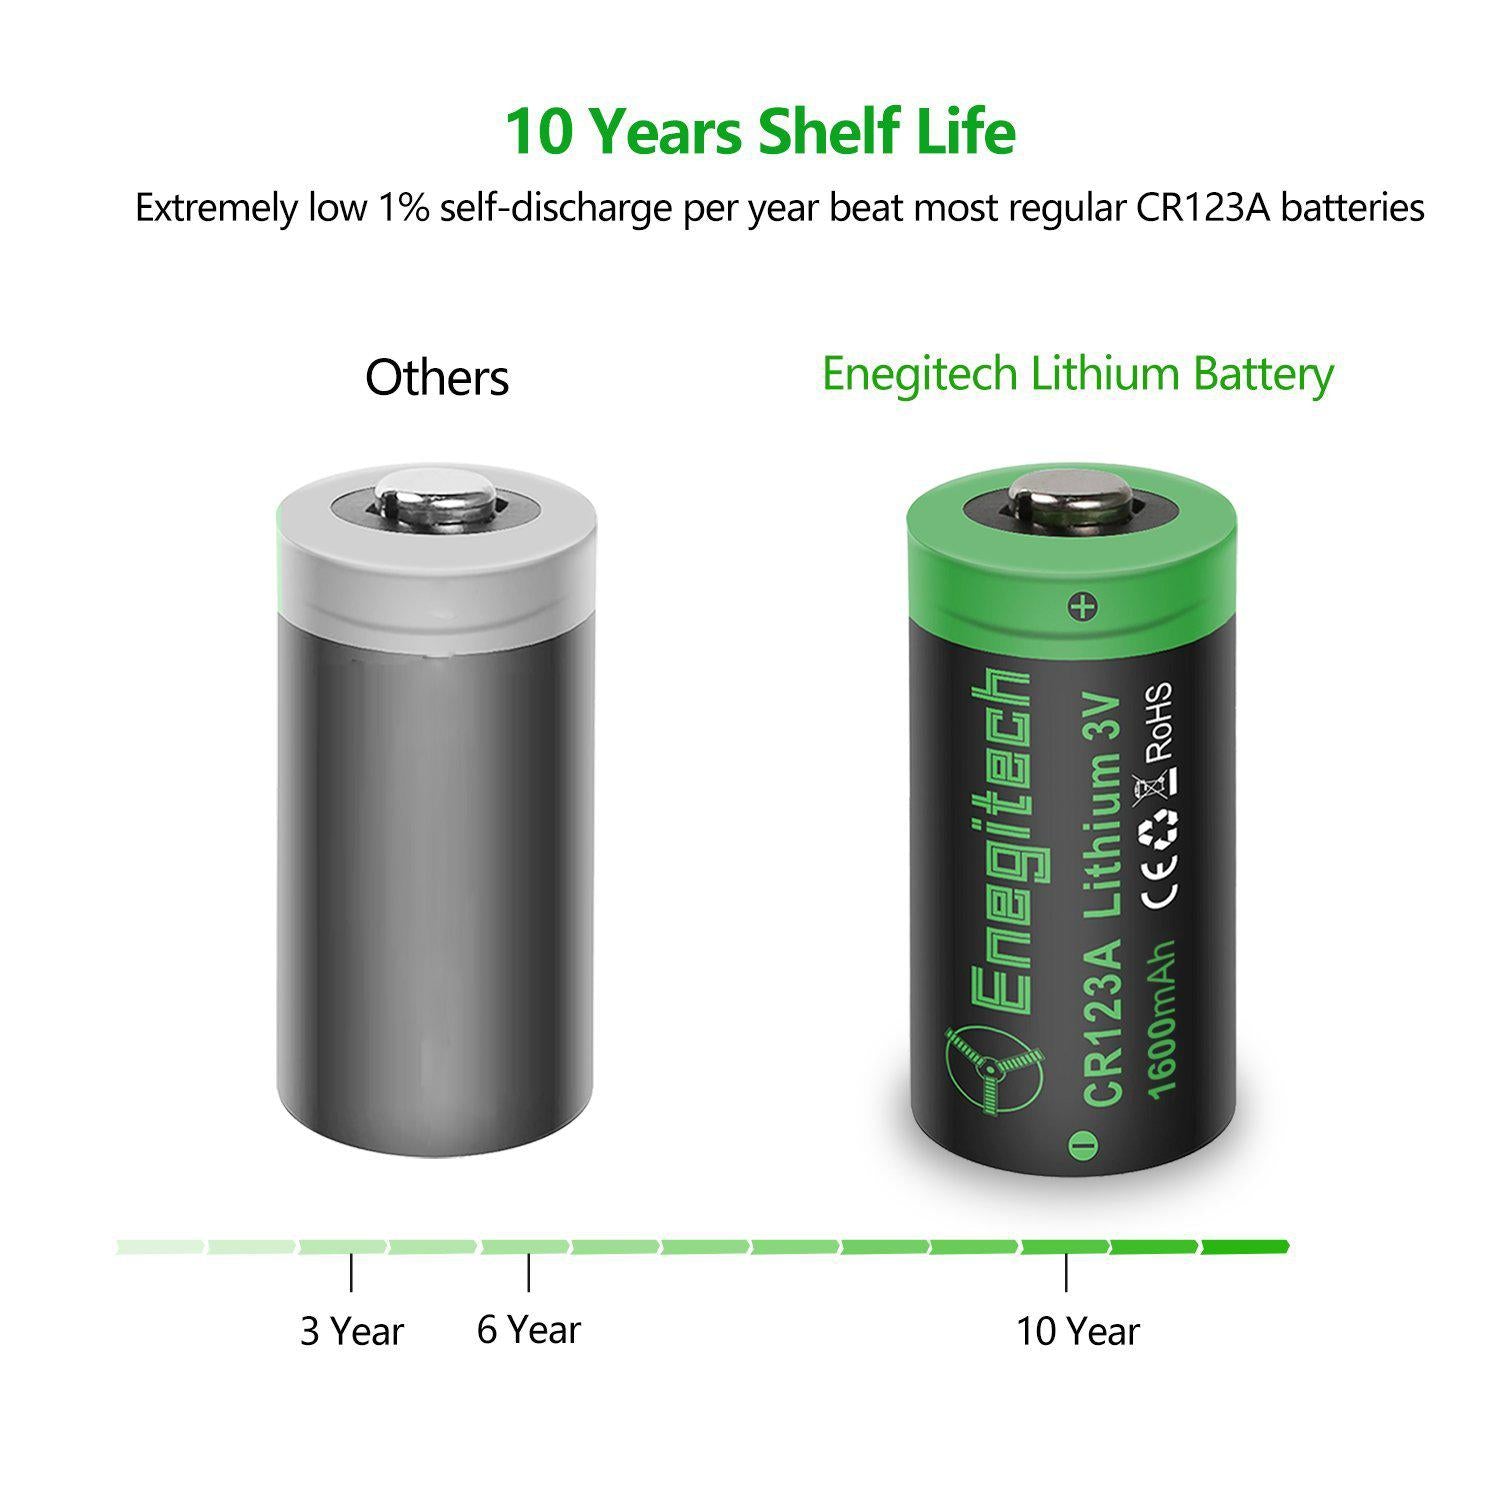 CR123A 3V Lithium Battery - (12-Pack)